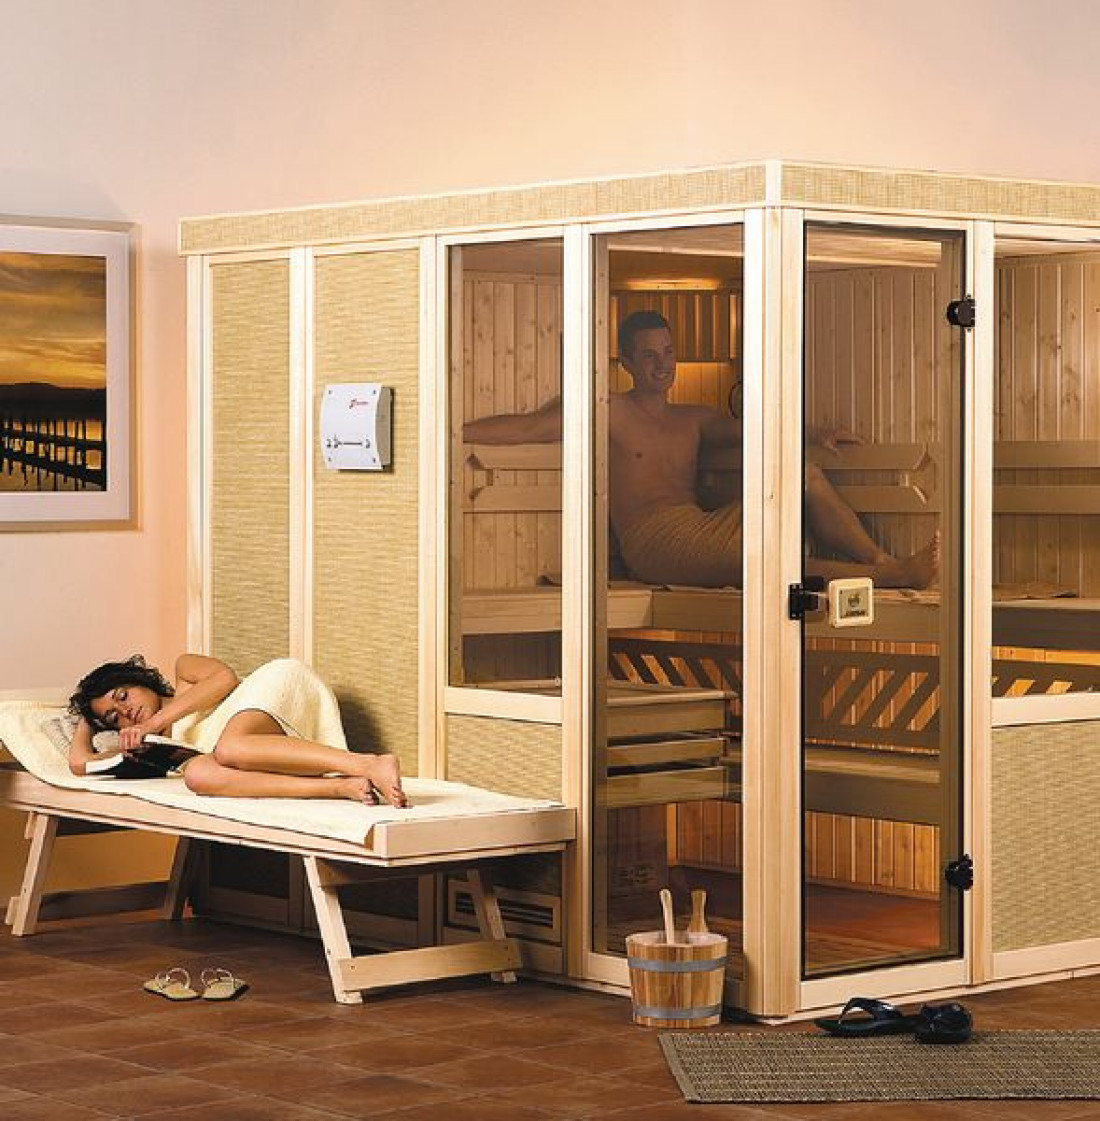 Jak zbudowana jest sauna?